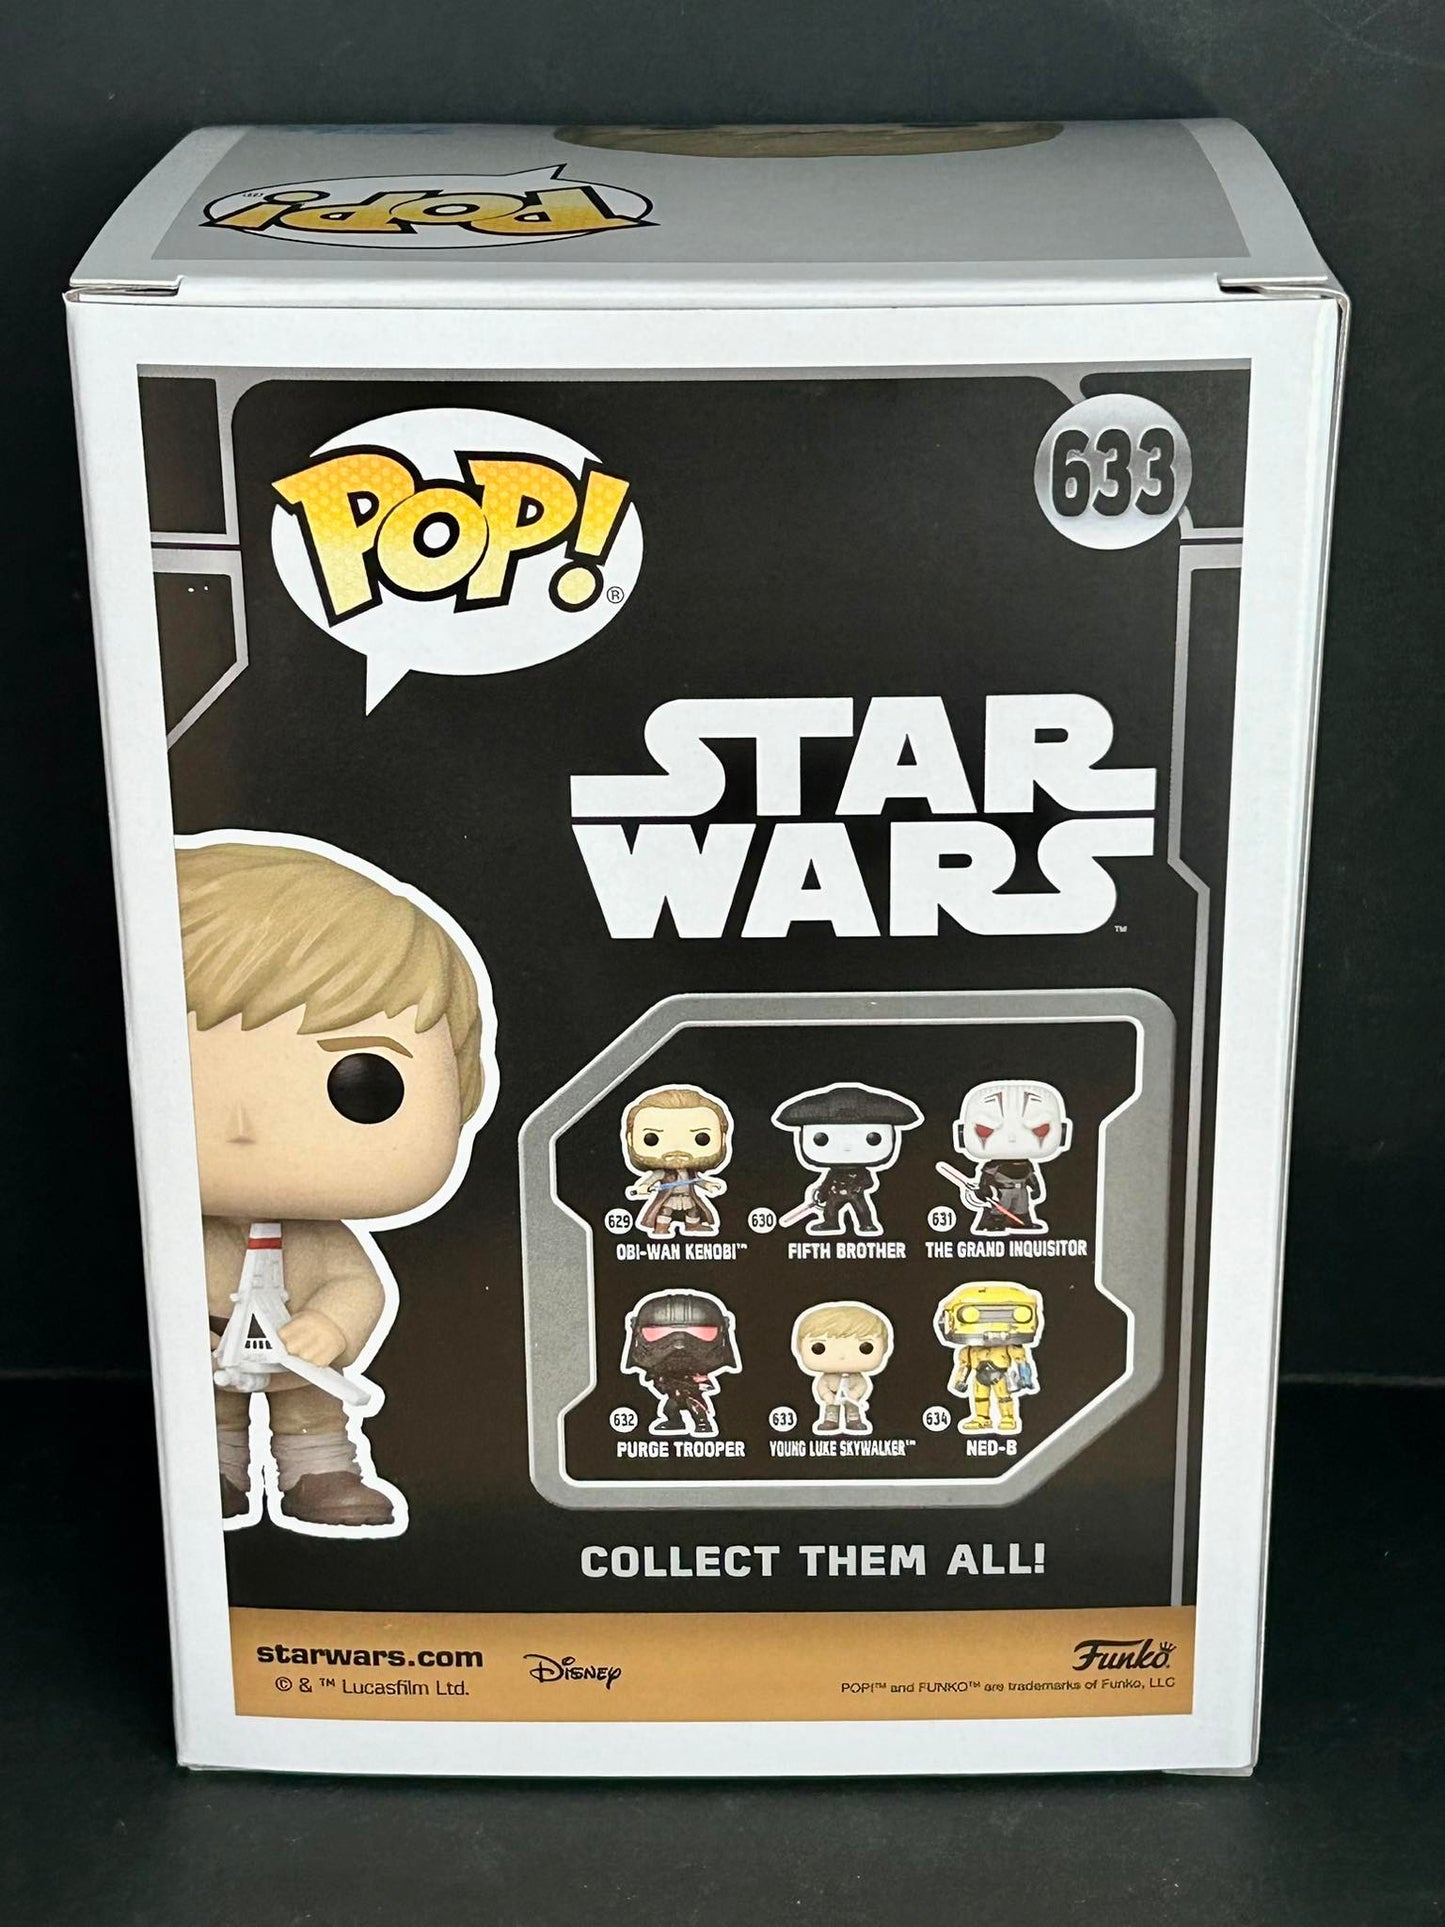 Funko Pop! Star Wars: Obi-Wan Kenobi - Young Luke Skywalker